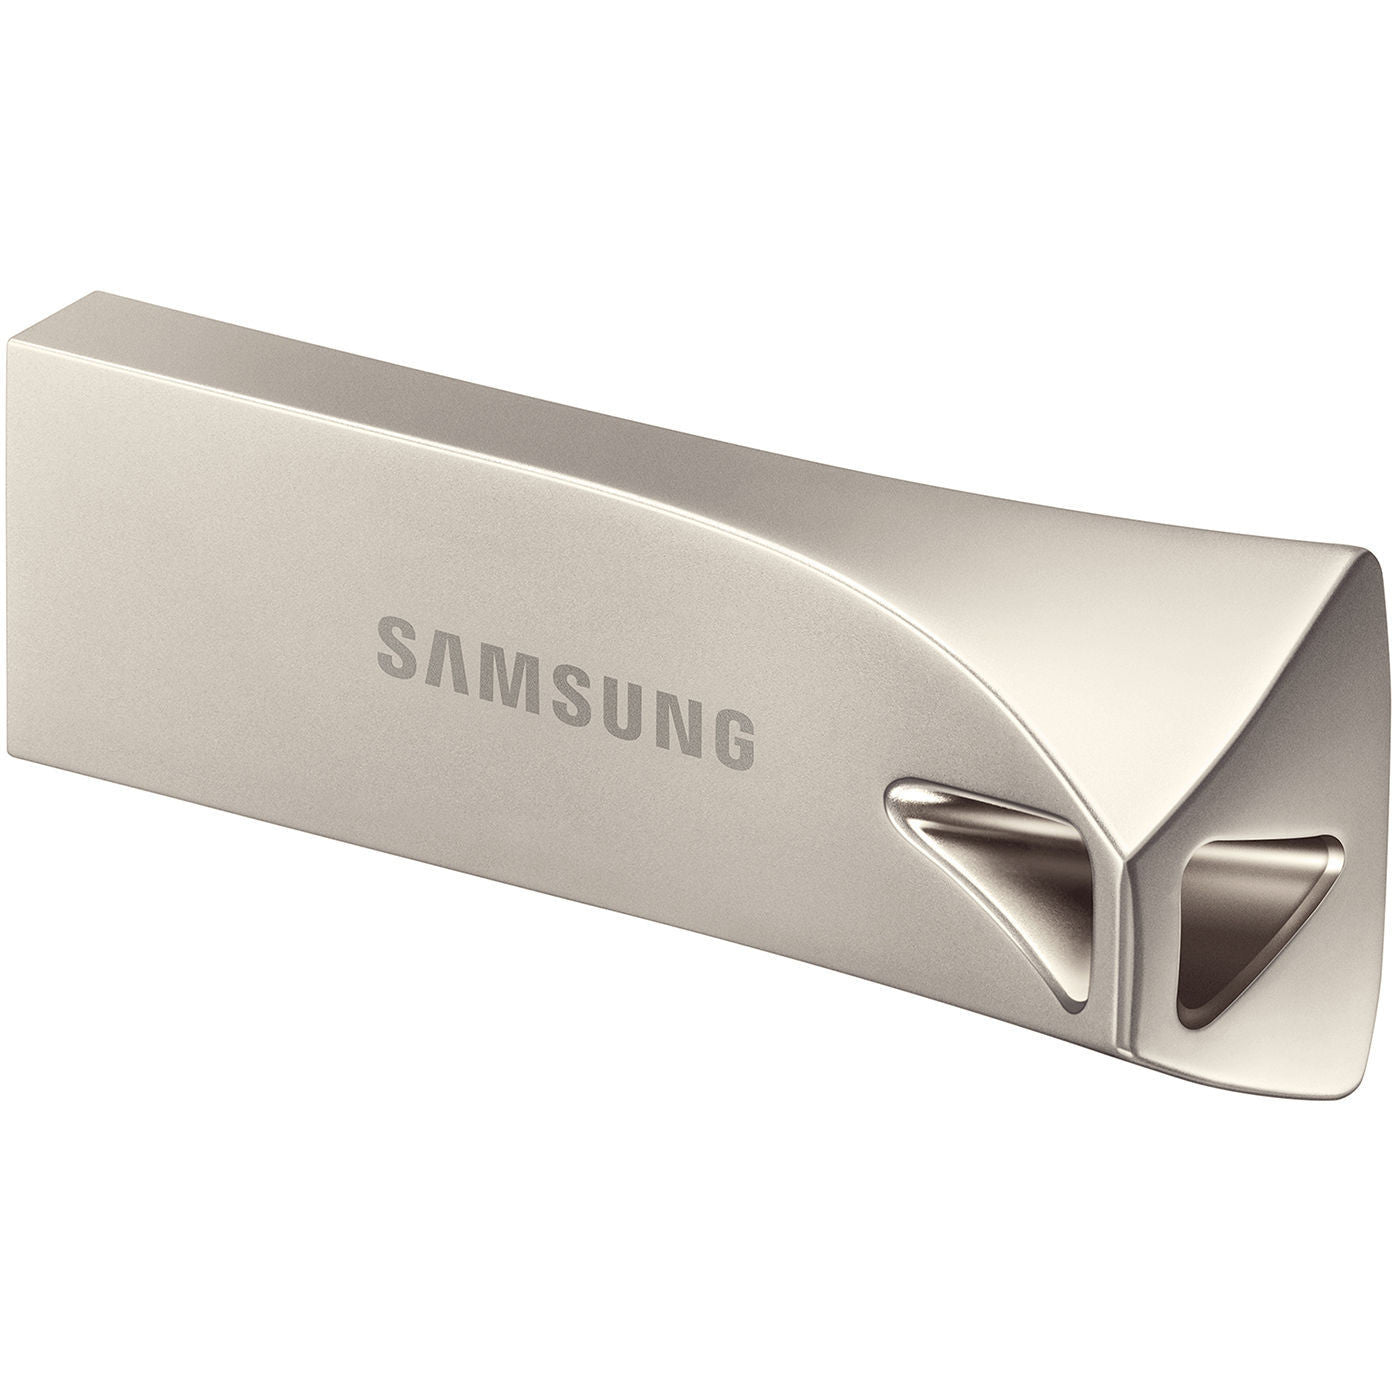 Samsung USB 3.1 Flash Drive BAR Plus 32GB Champagne Silver